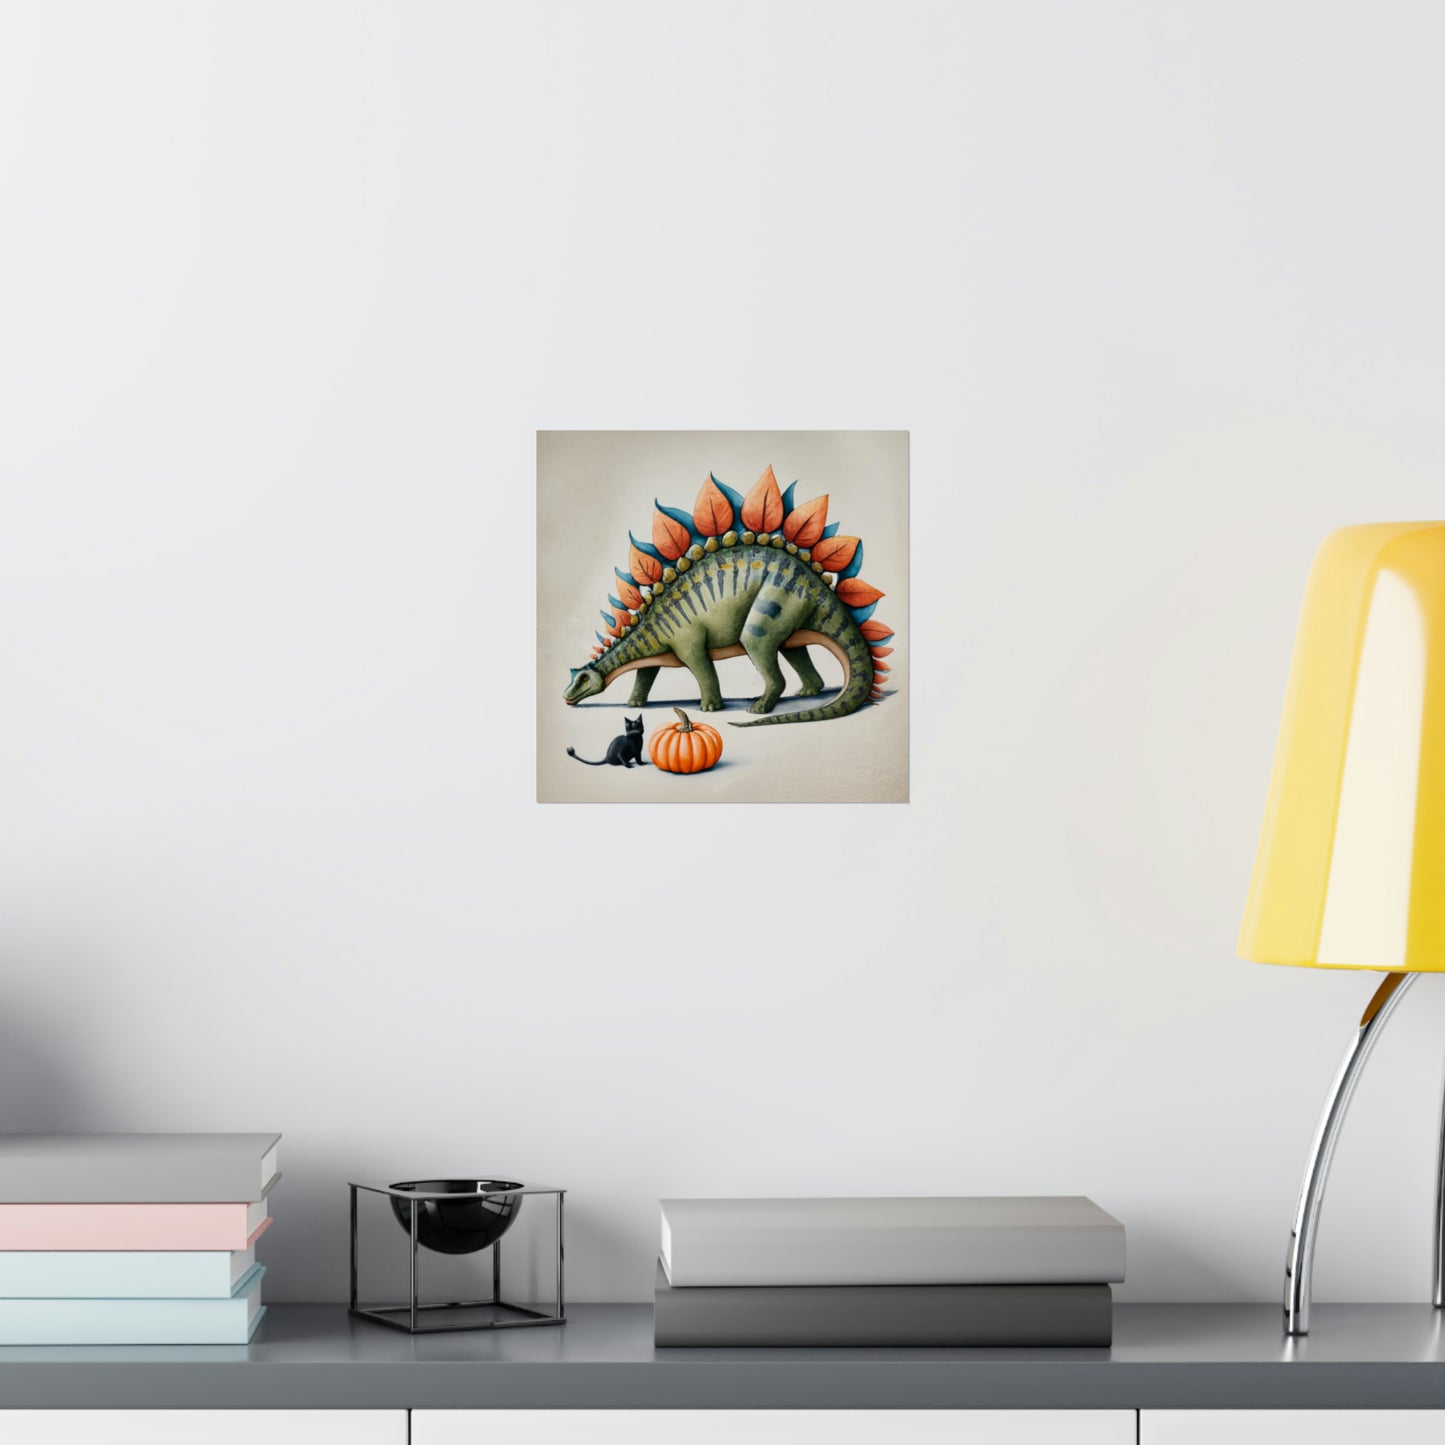 Stegosaurus and Black Cat: Cute Halloween Wall Art v1